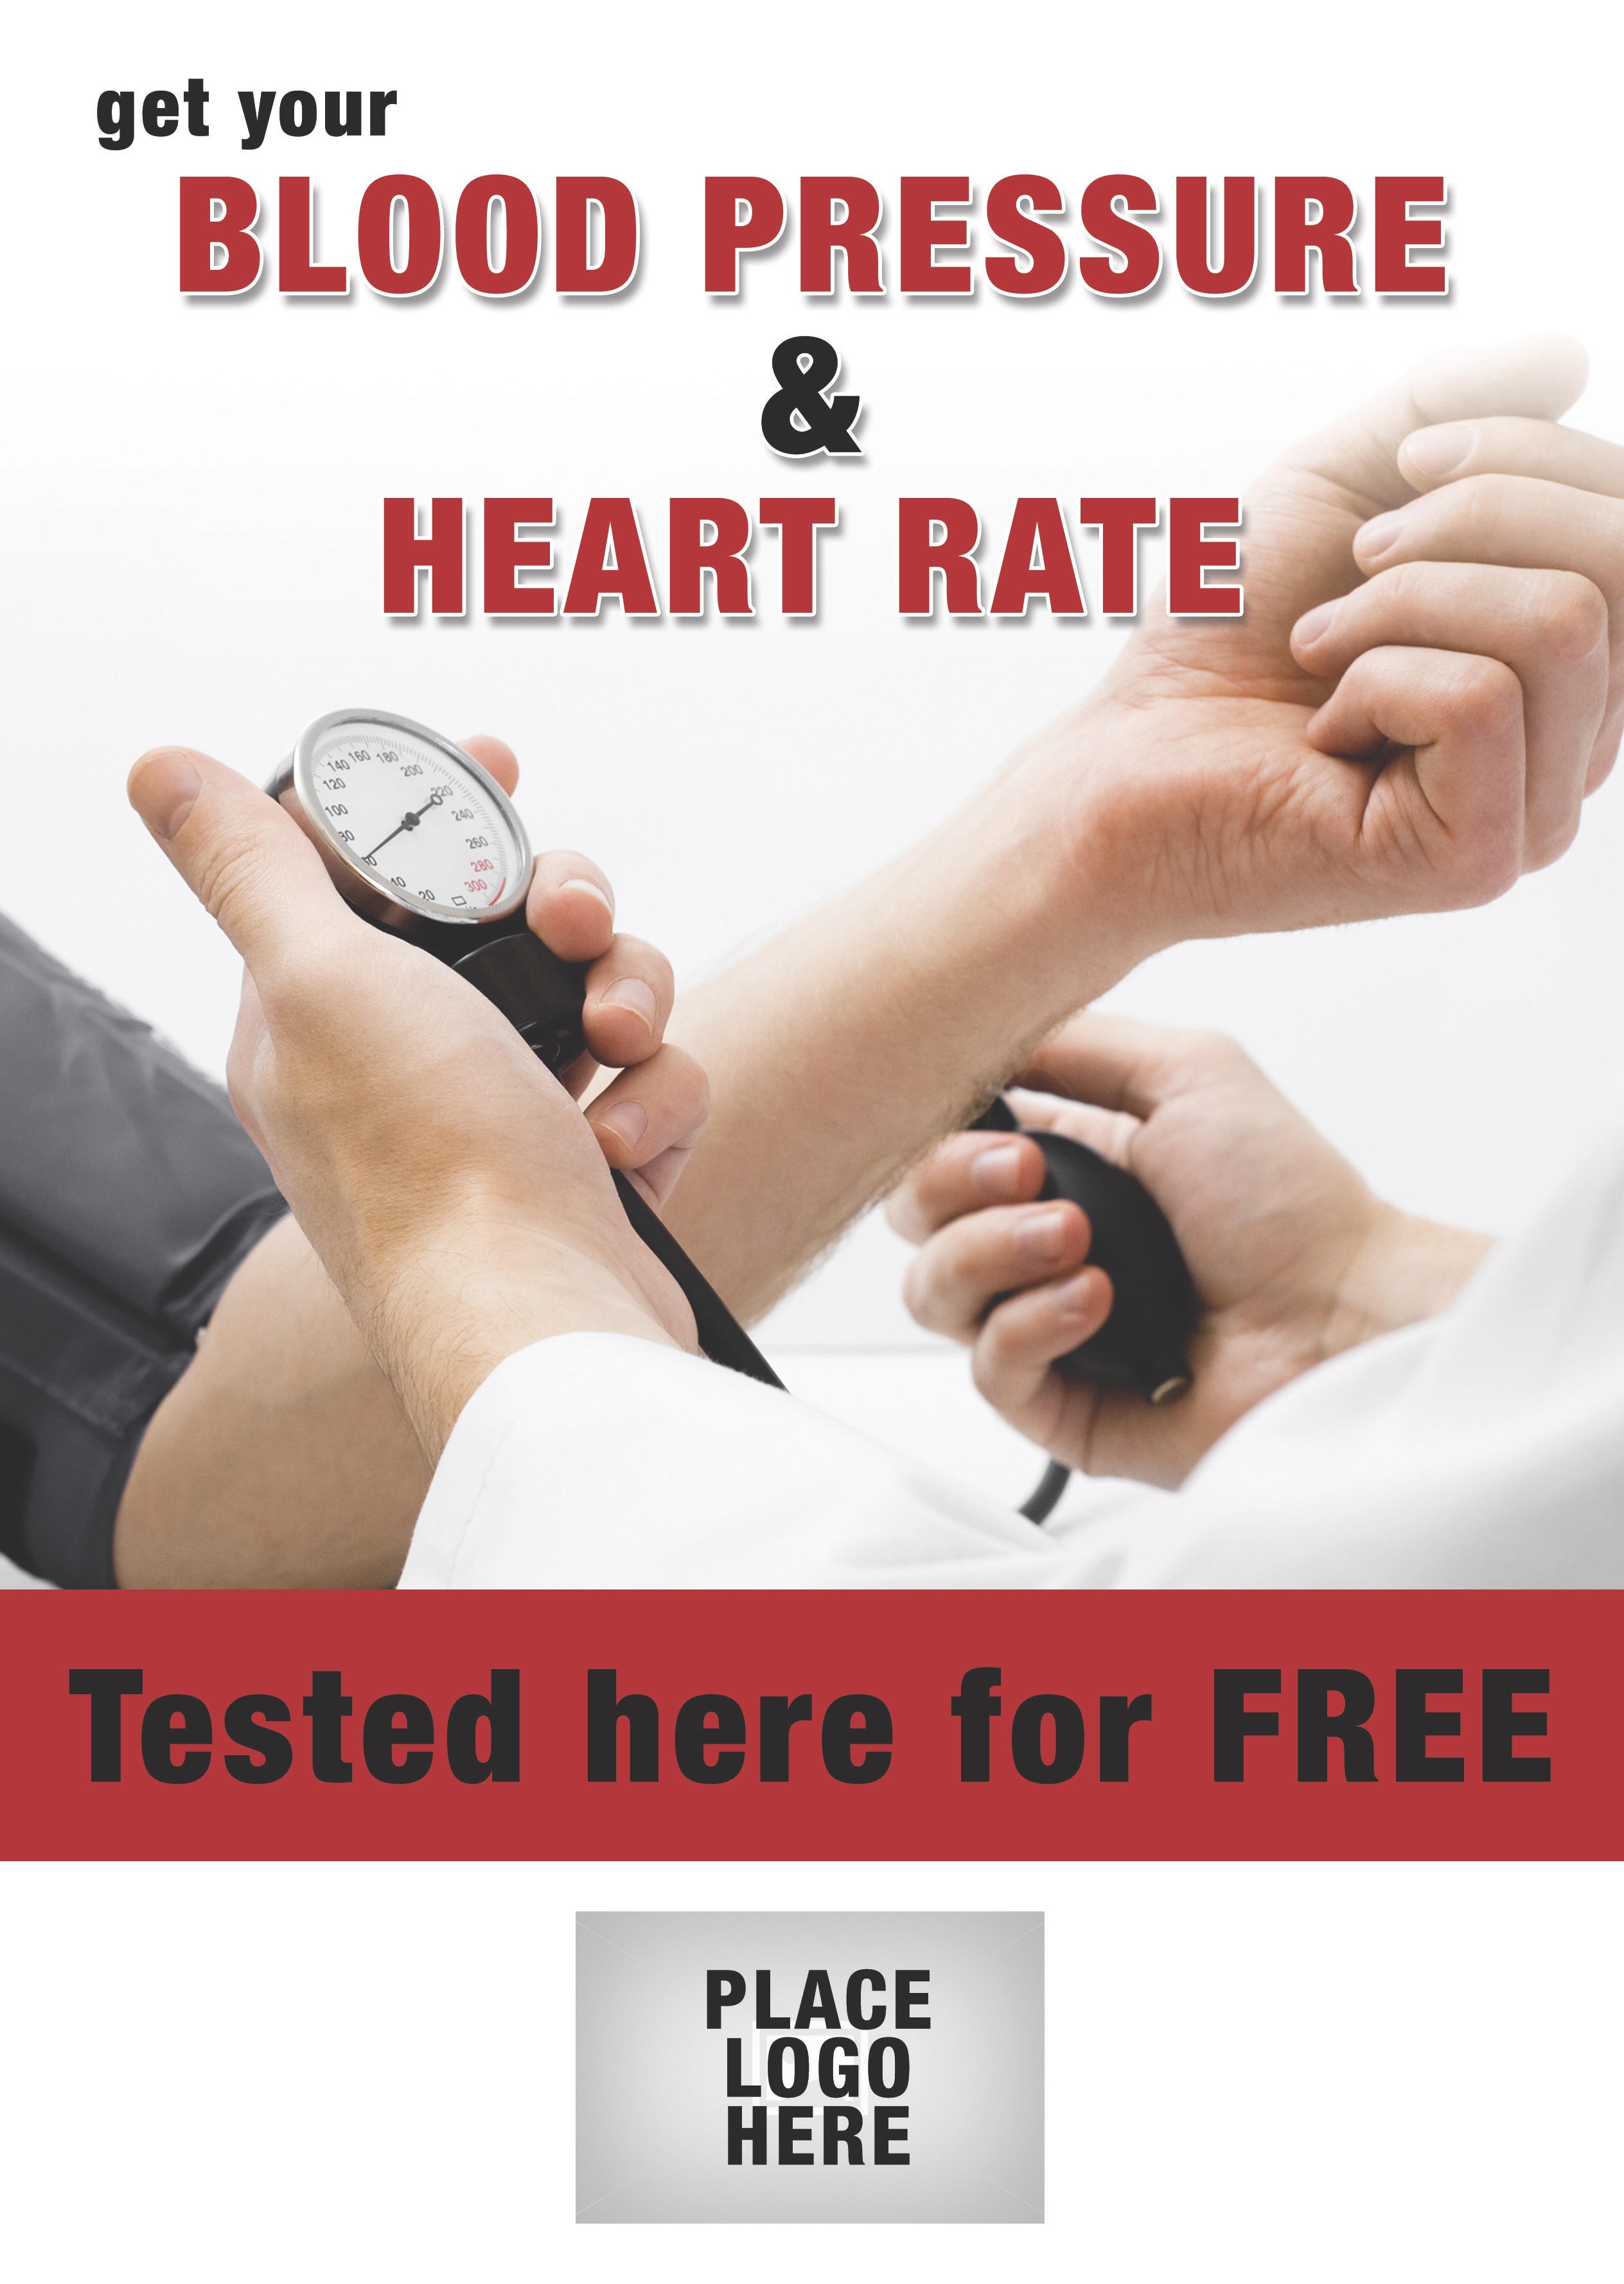 Blood Pressure Testing Campaign Active Management — Active Management